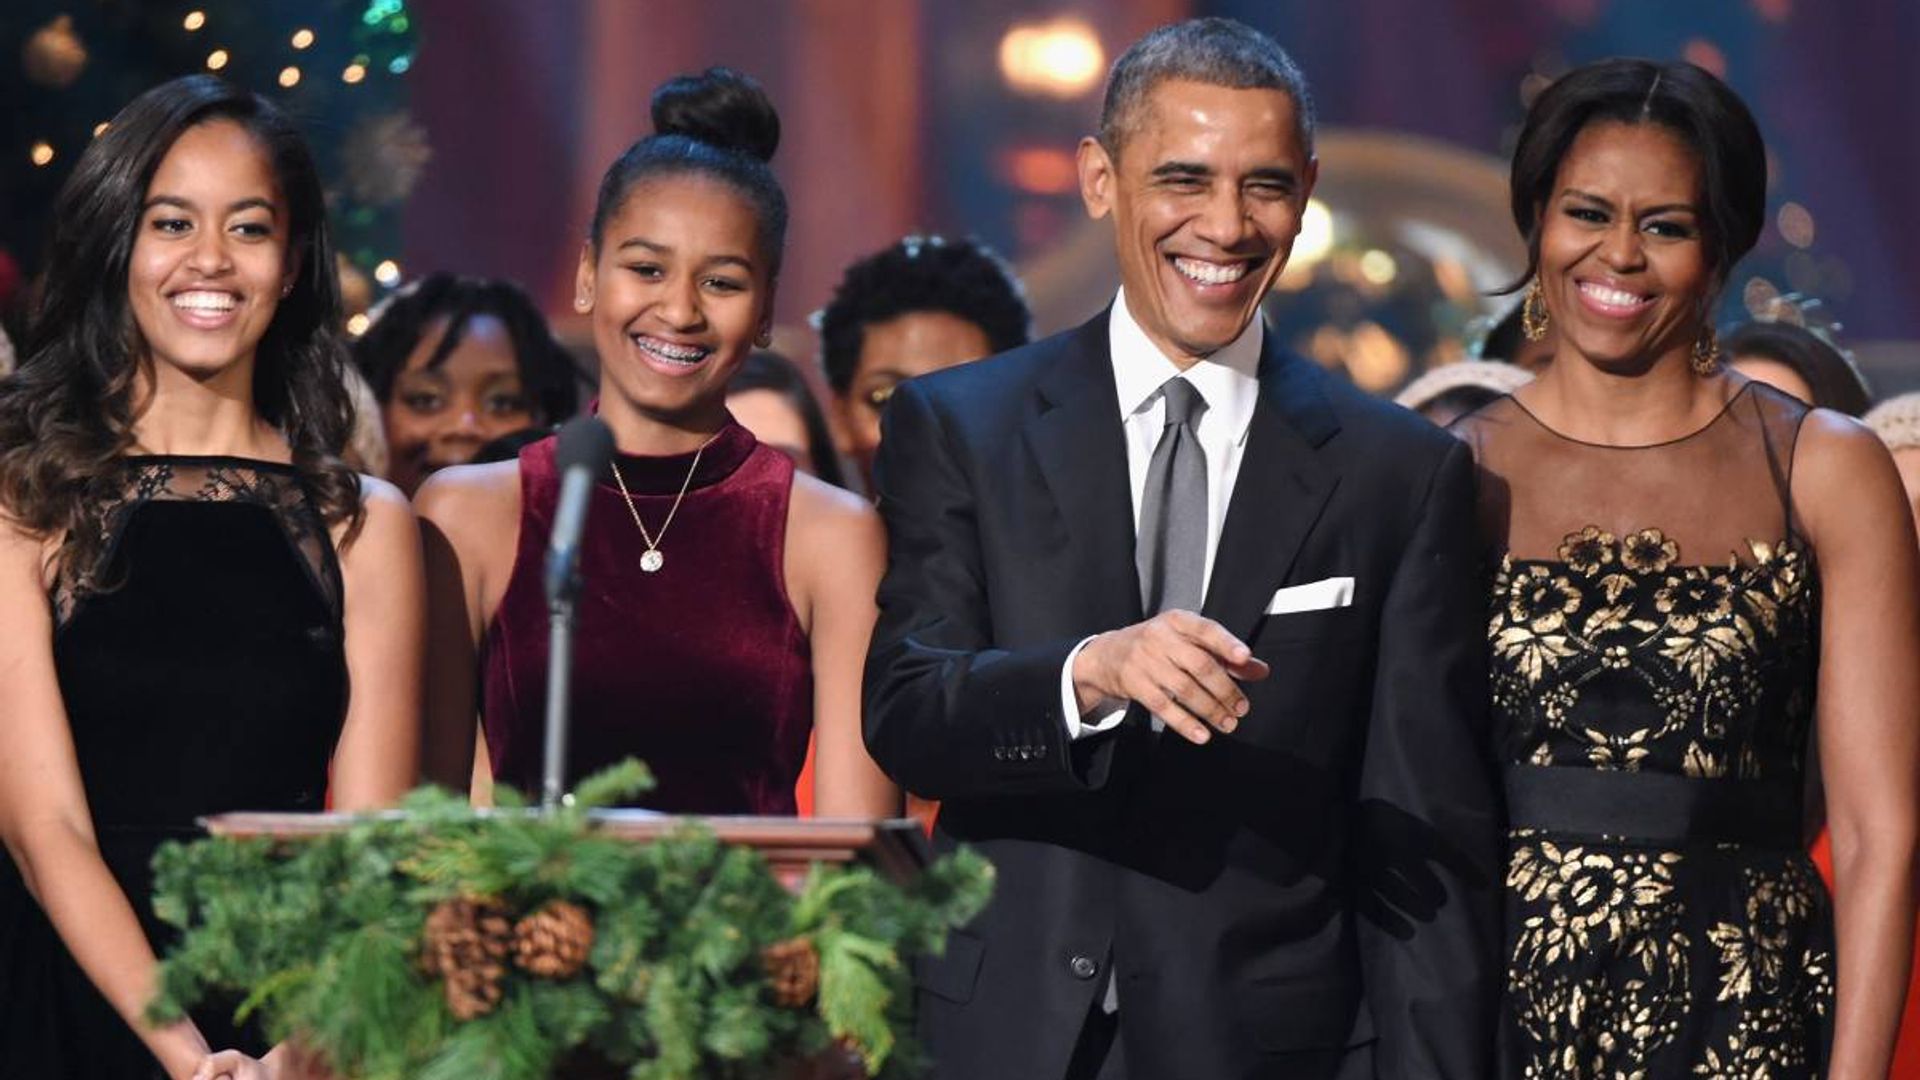 Michelle Obama's daughter Sasha's impressive living situation revealed